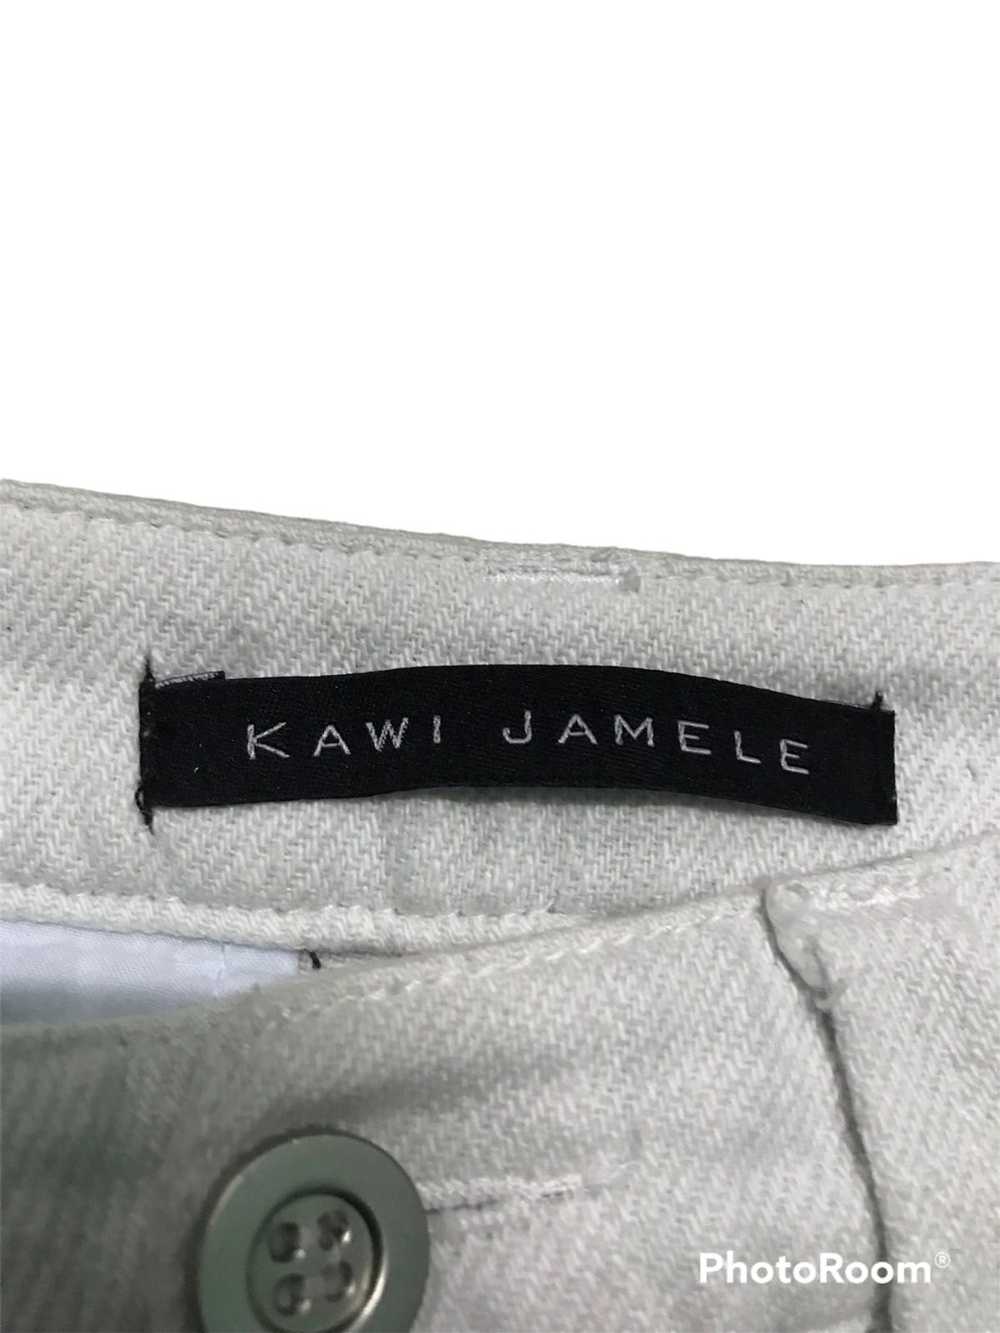 Edition Japan × Japanese Brand Kawi jemele jeans - image 4